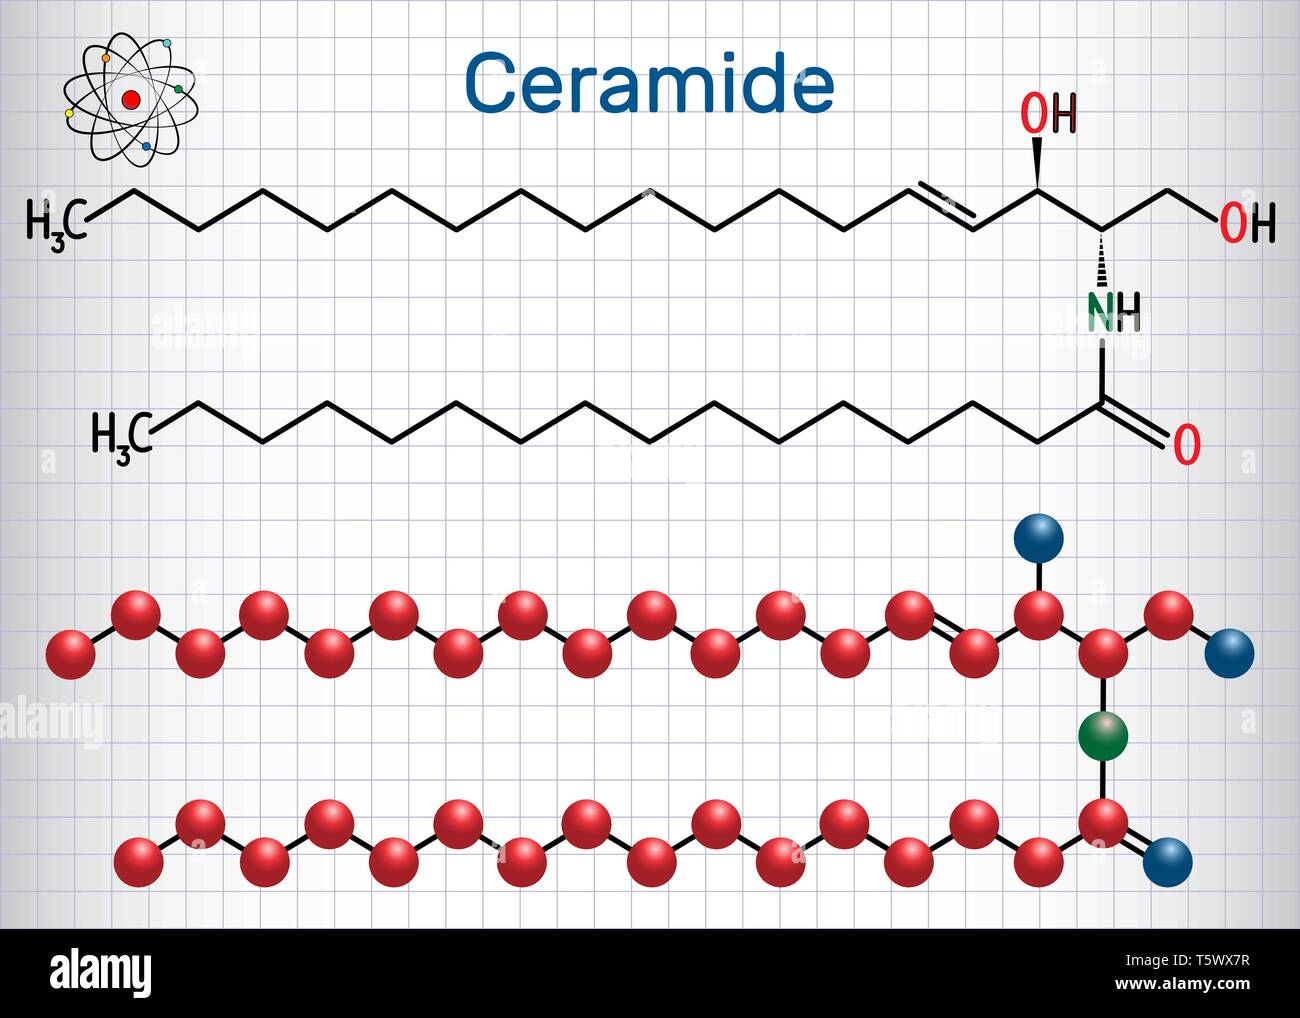 Ceramide Lipid Molecule Stock Vector Images Alamy